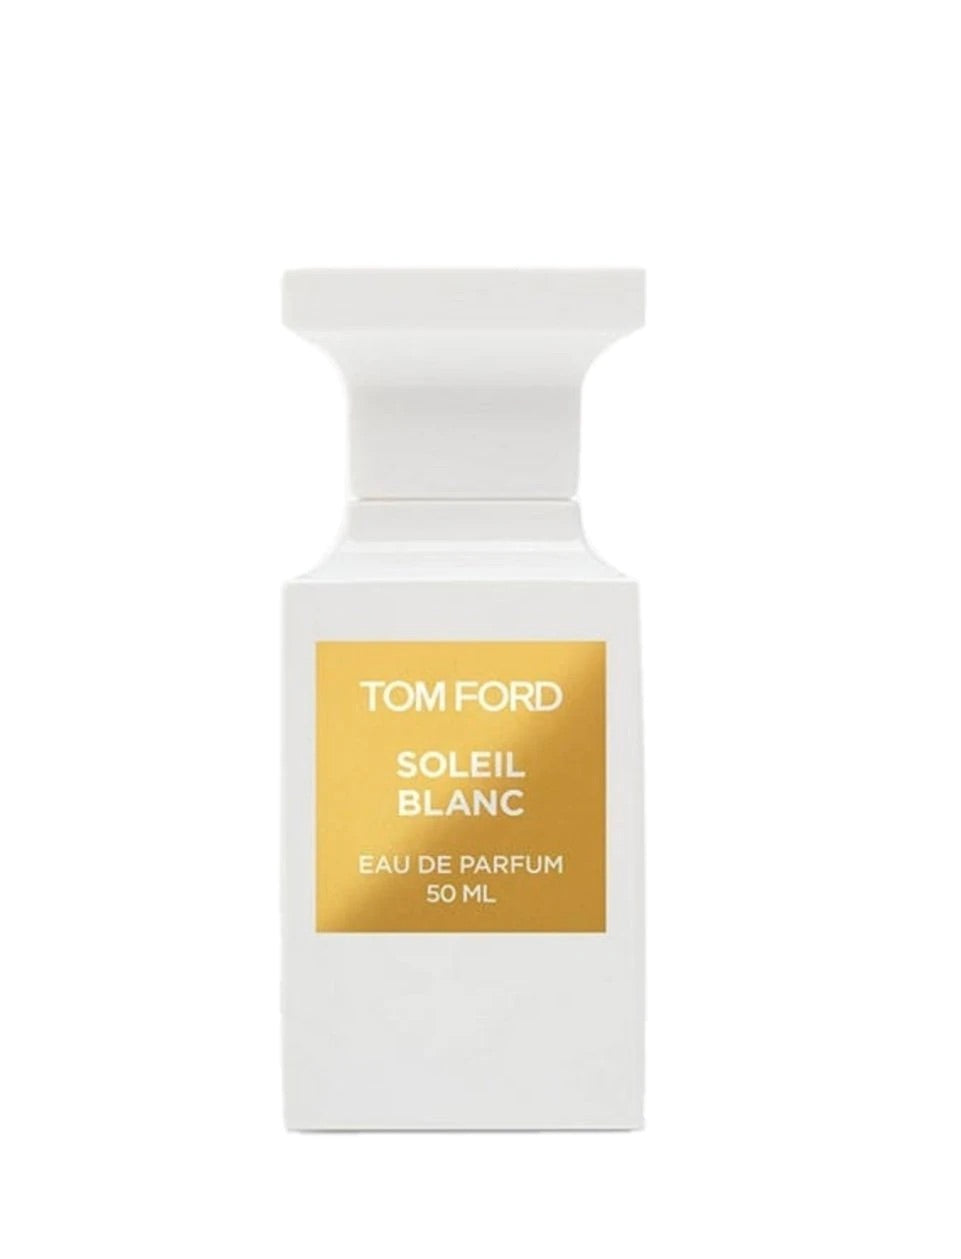 Tom Ford Soliel Blanc Eau De Parfum Samples